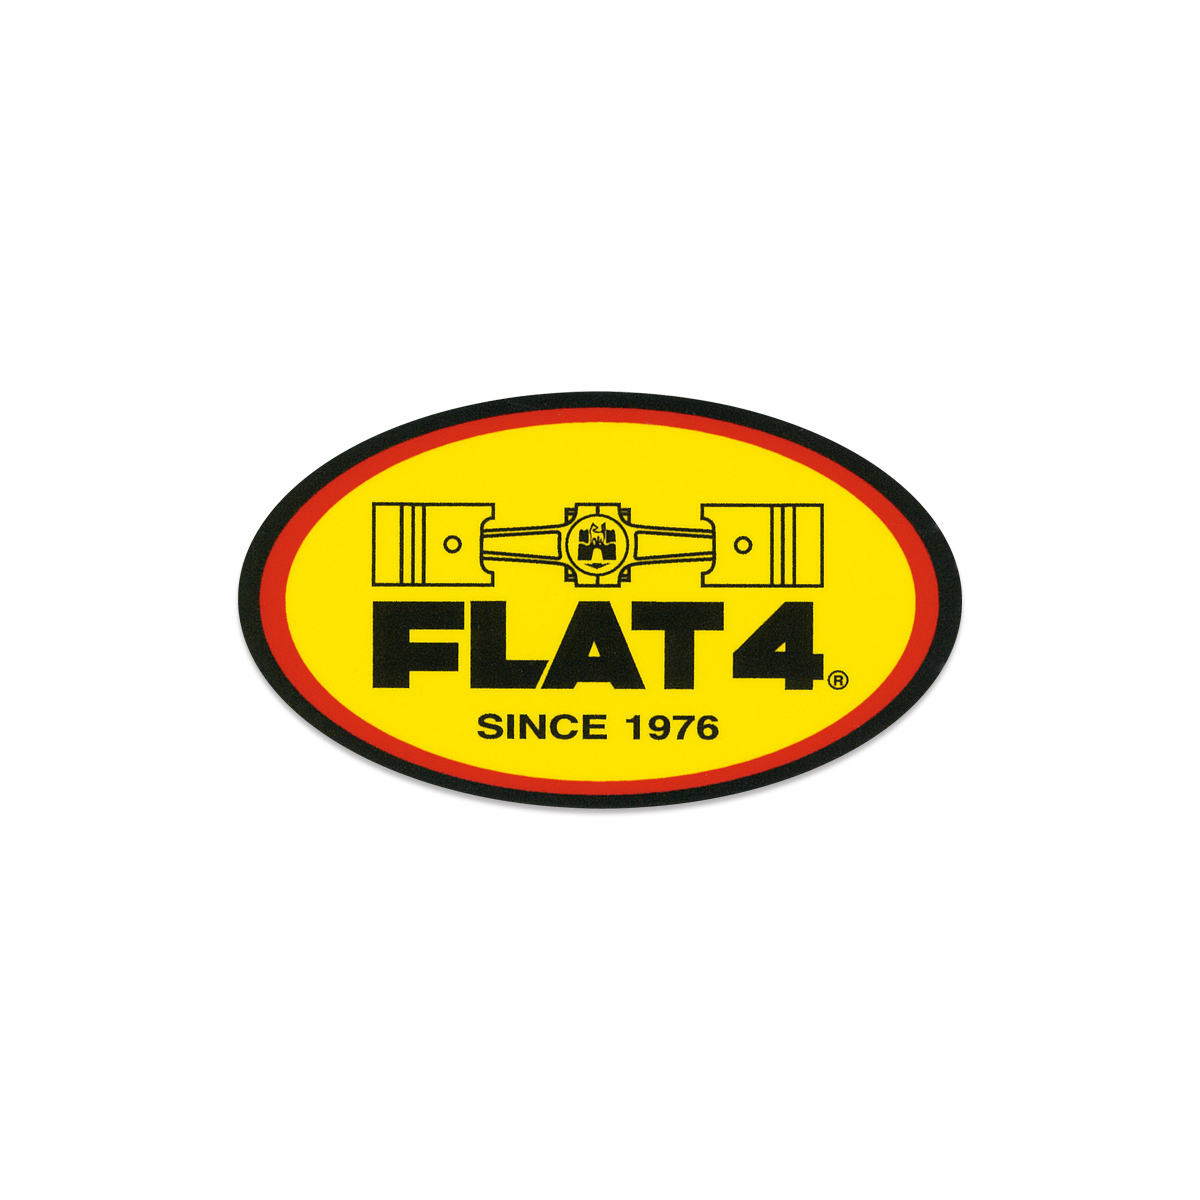 FLAT 4 ジャーマン カラー デカール S